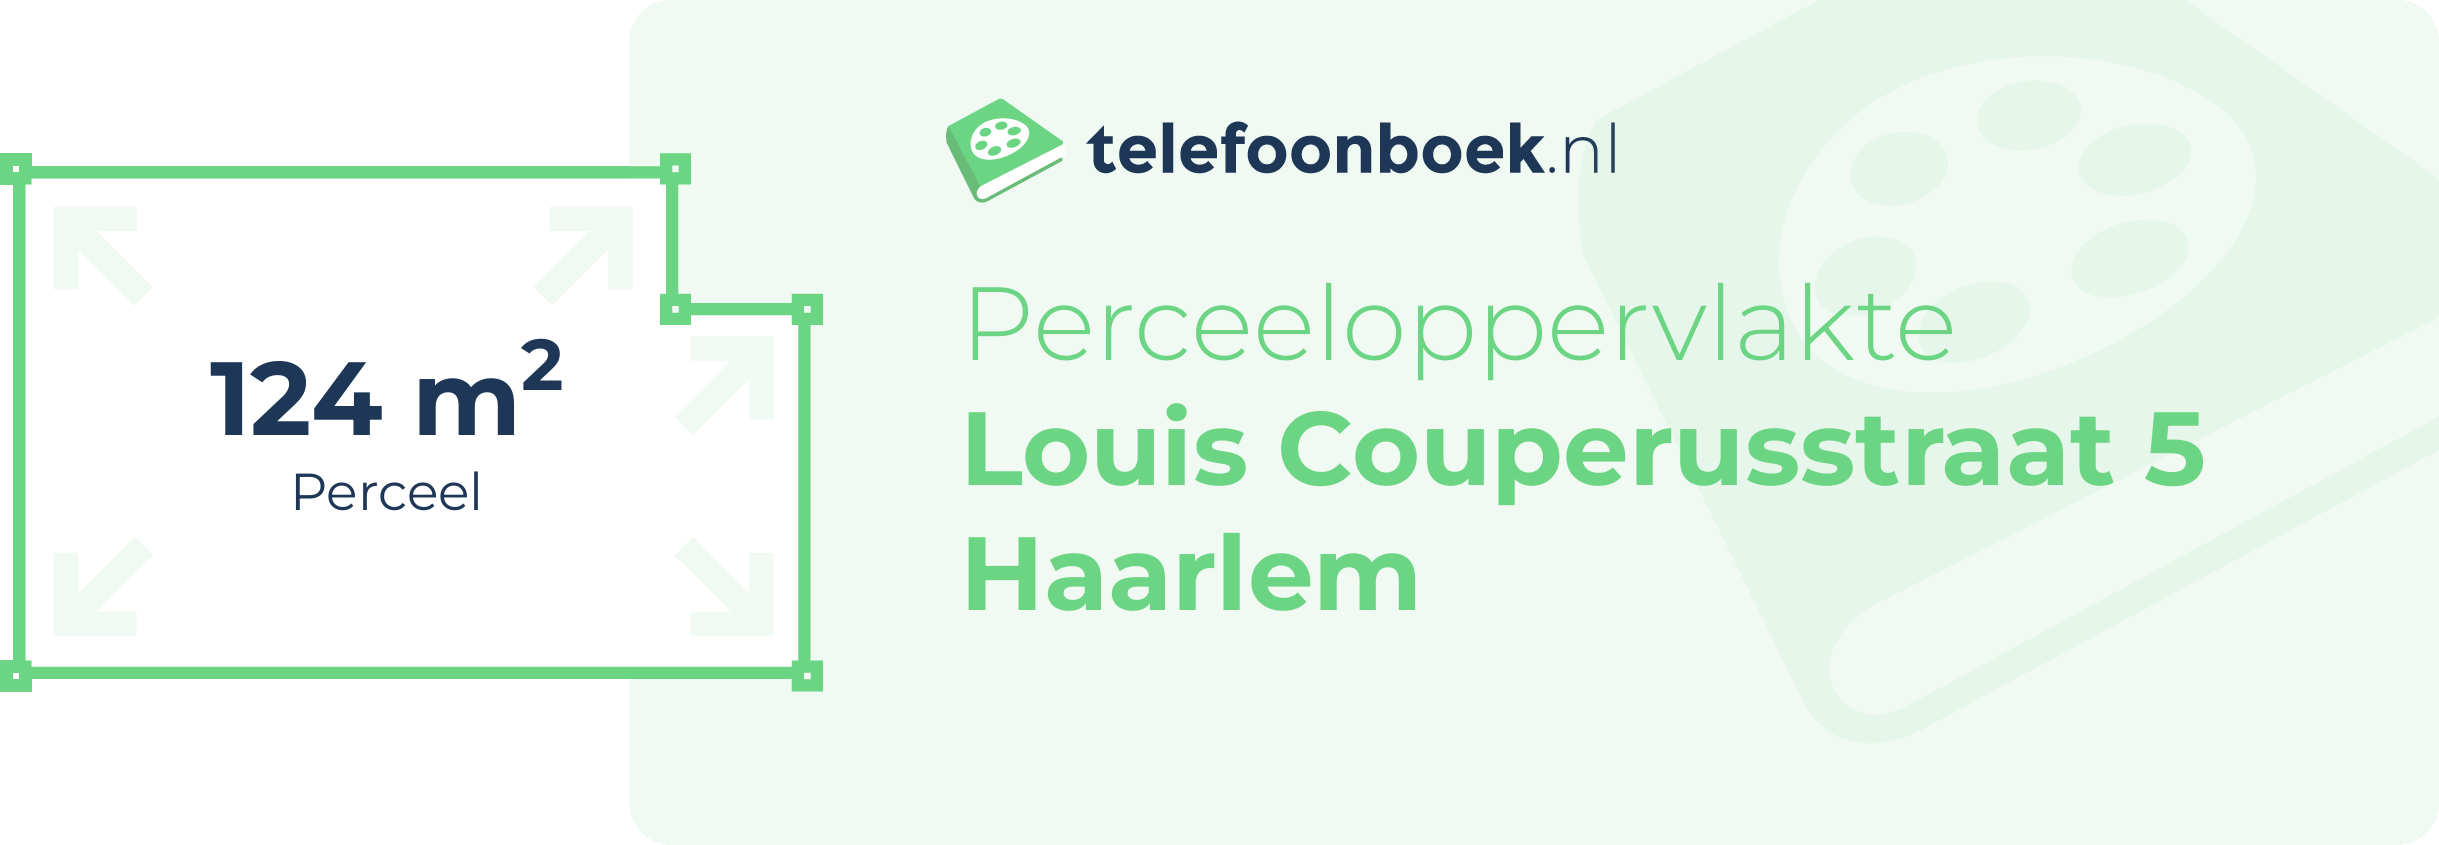 Perceeloppervlakte Louis Couperusstraat 5 Haarlem